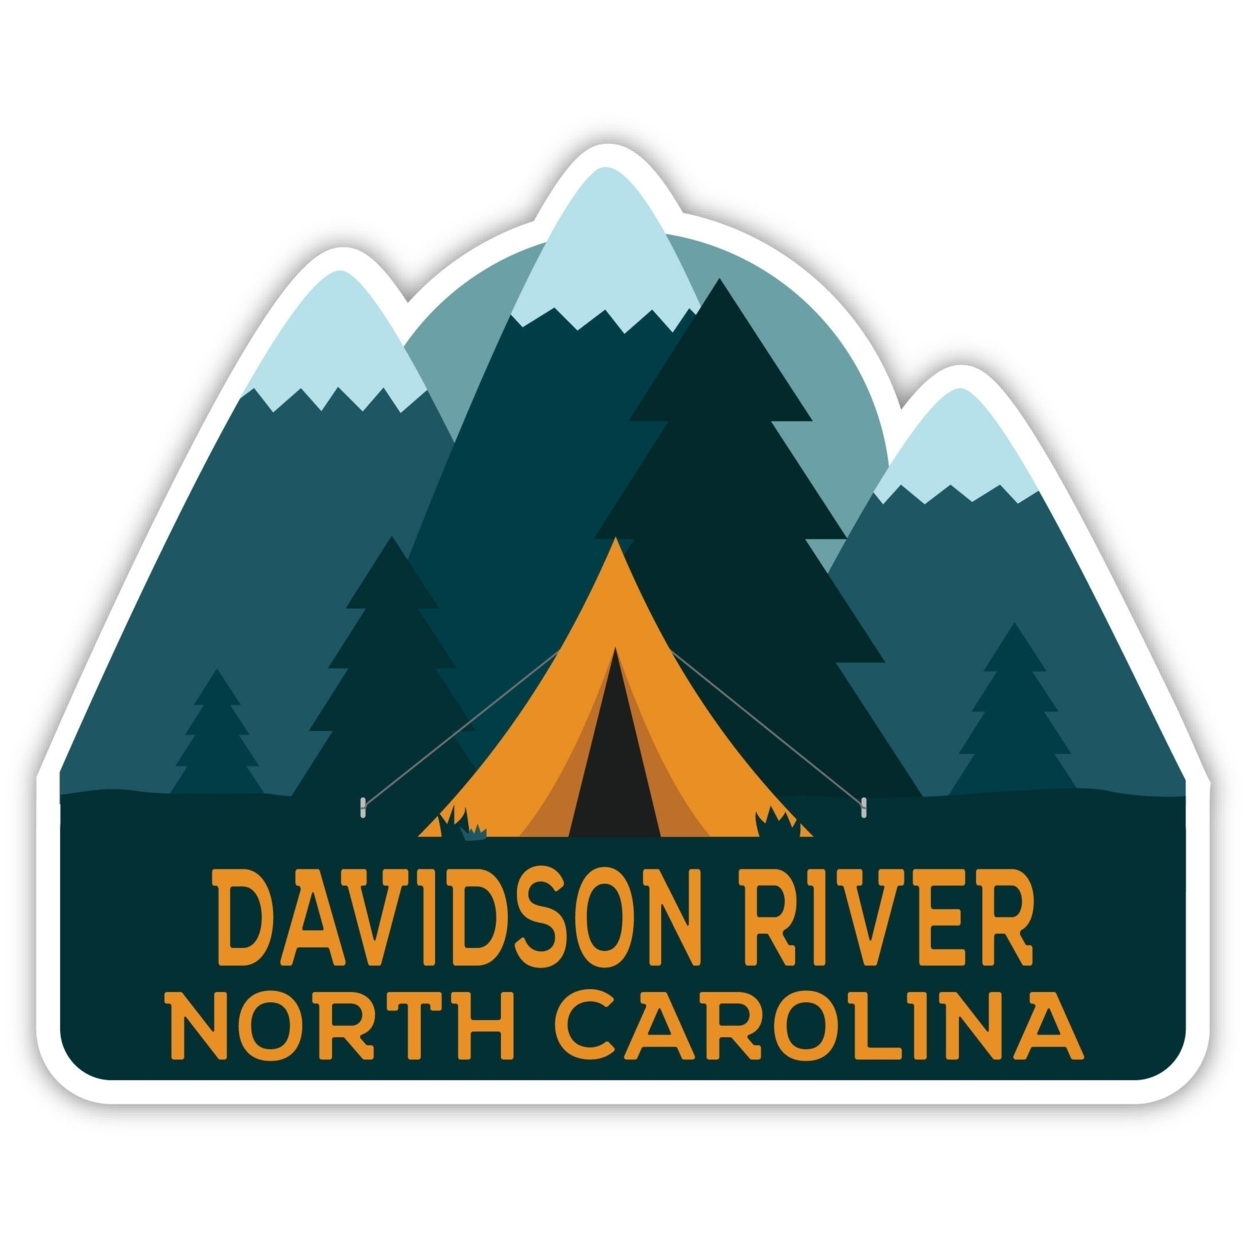 Davidson River North Carolina Souvenir Decorative Stickers (Choose Theme And Size) - 4-Pack, 2-Inch, Tent